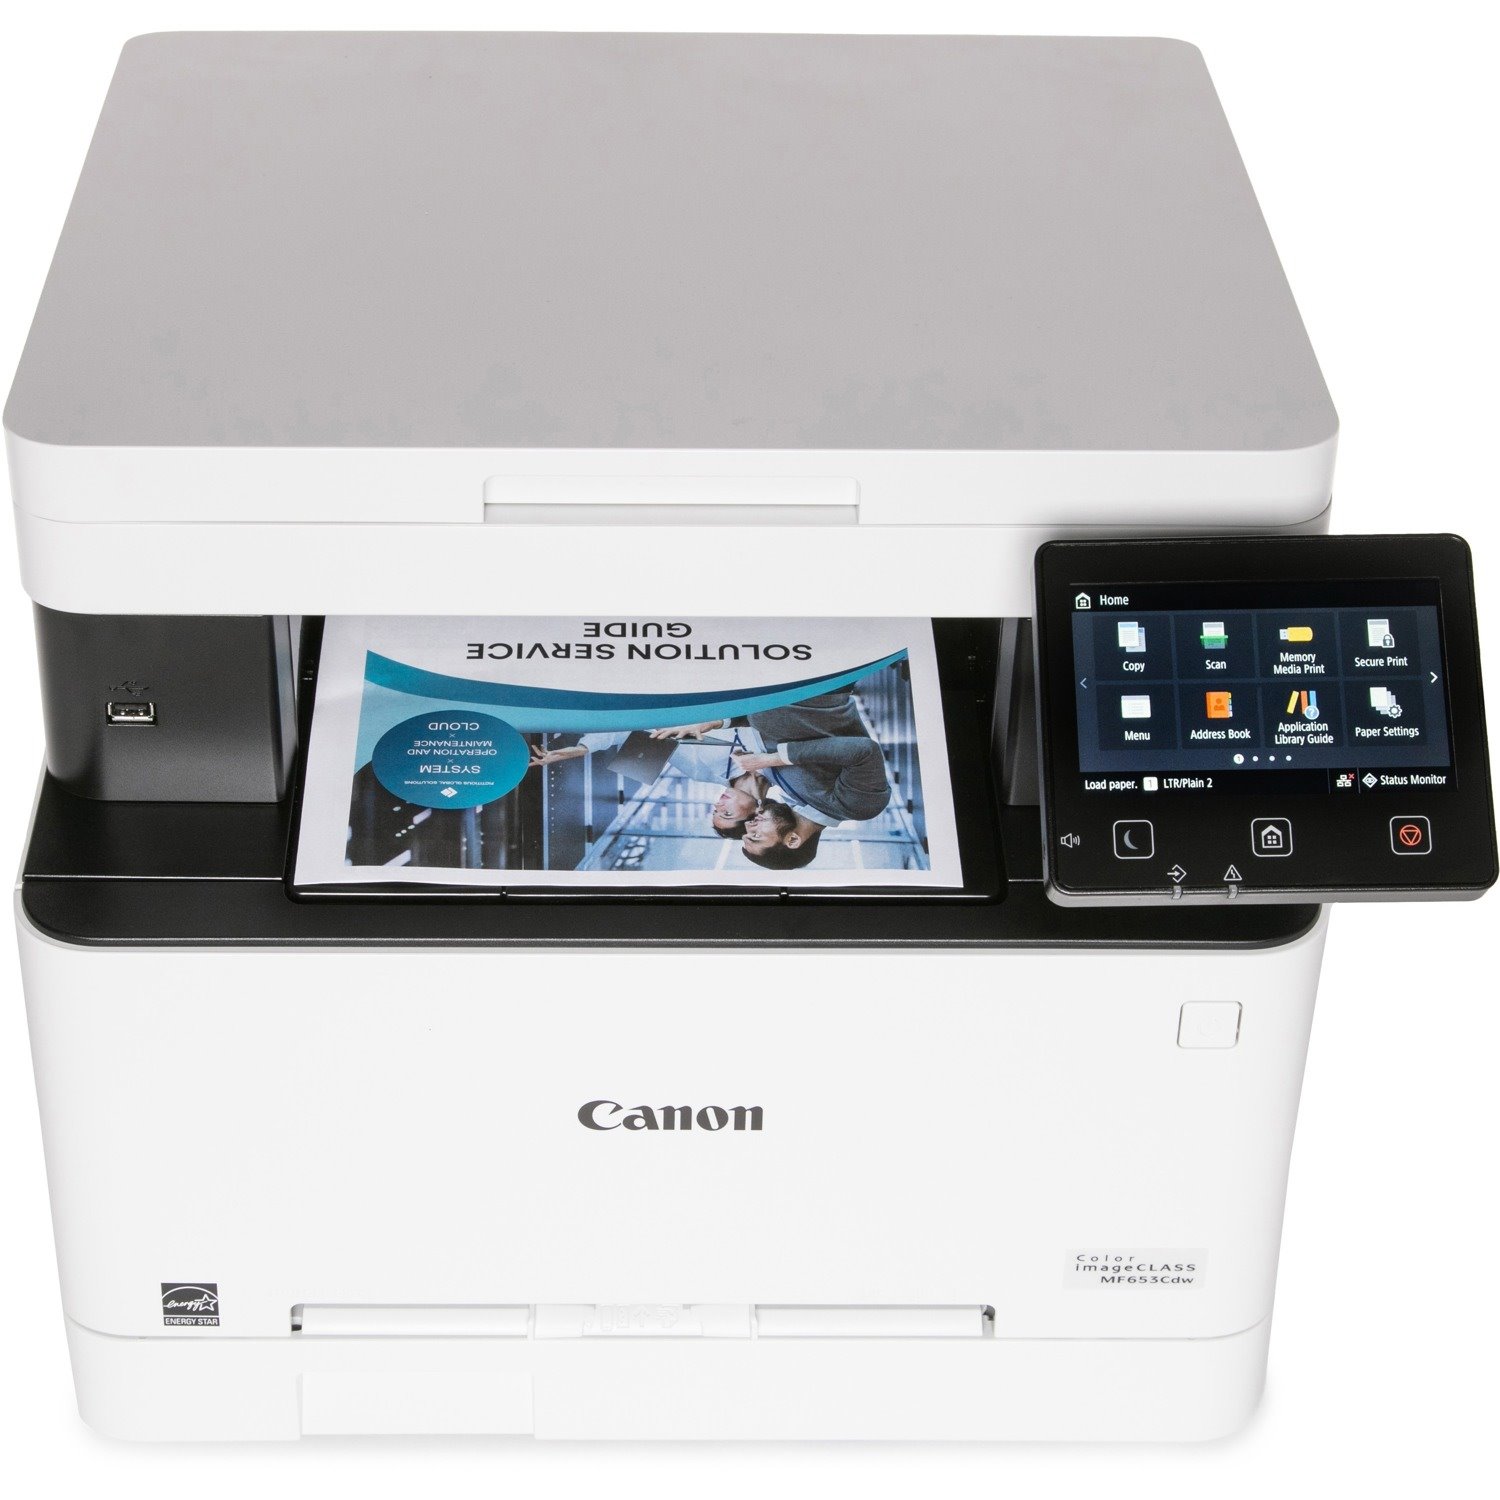 Canon imageCLASS MF653Cdw Wireless Laser Multifunction Printer - Color - White